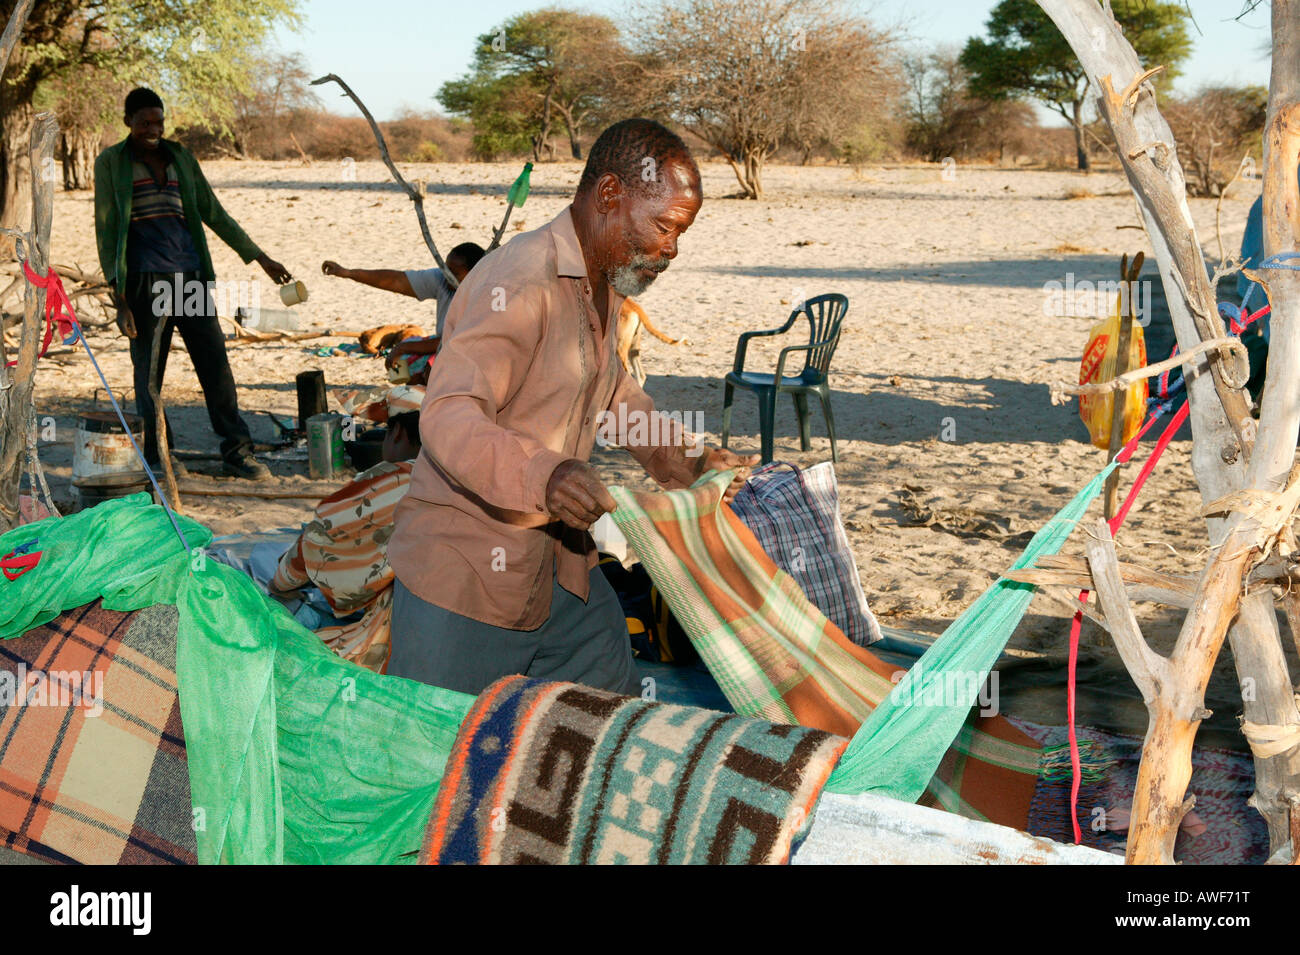 Camp wird abgeräumt, Cattlepost Bothatogo, Botswana, Afrika Stockfoto